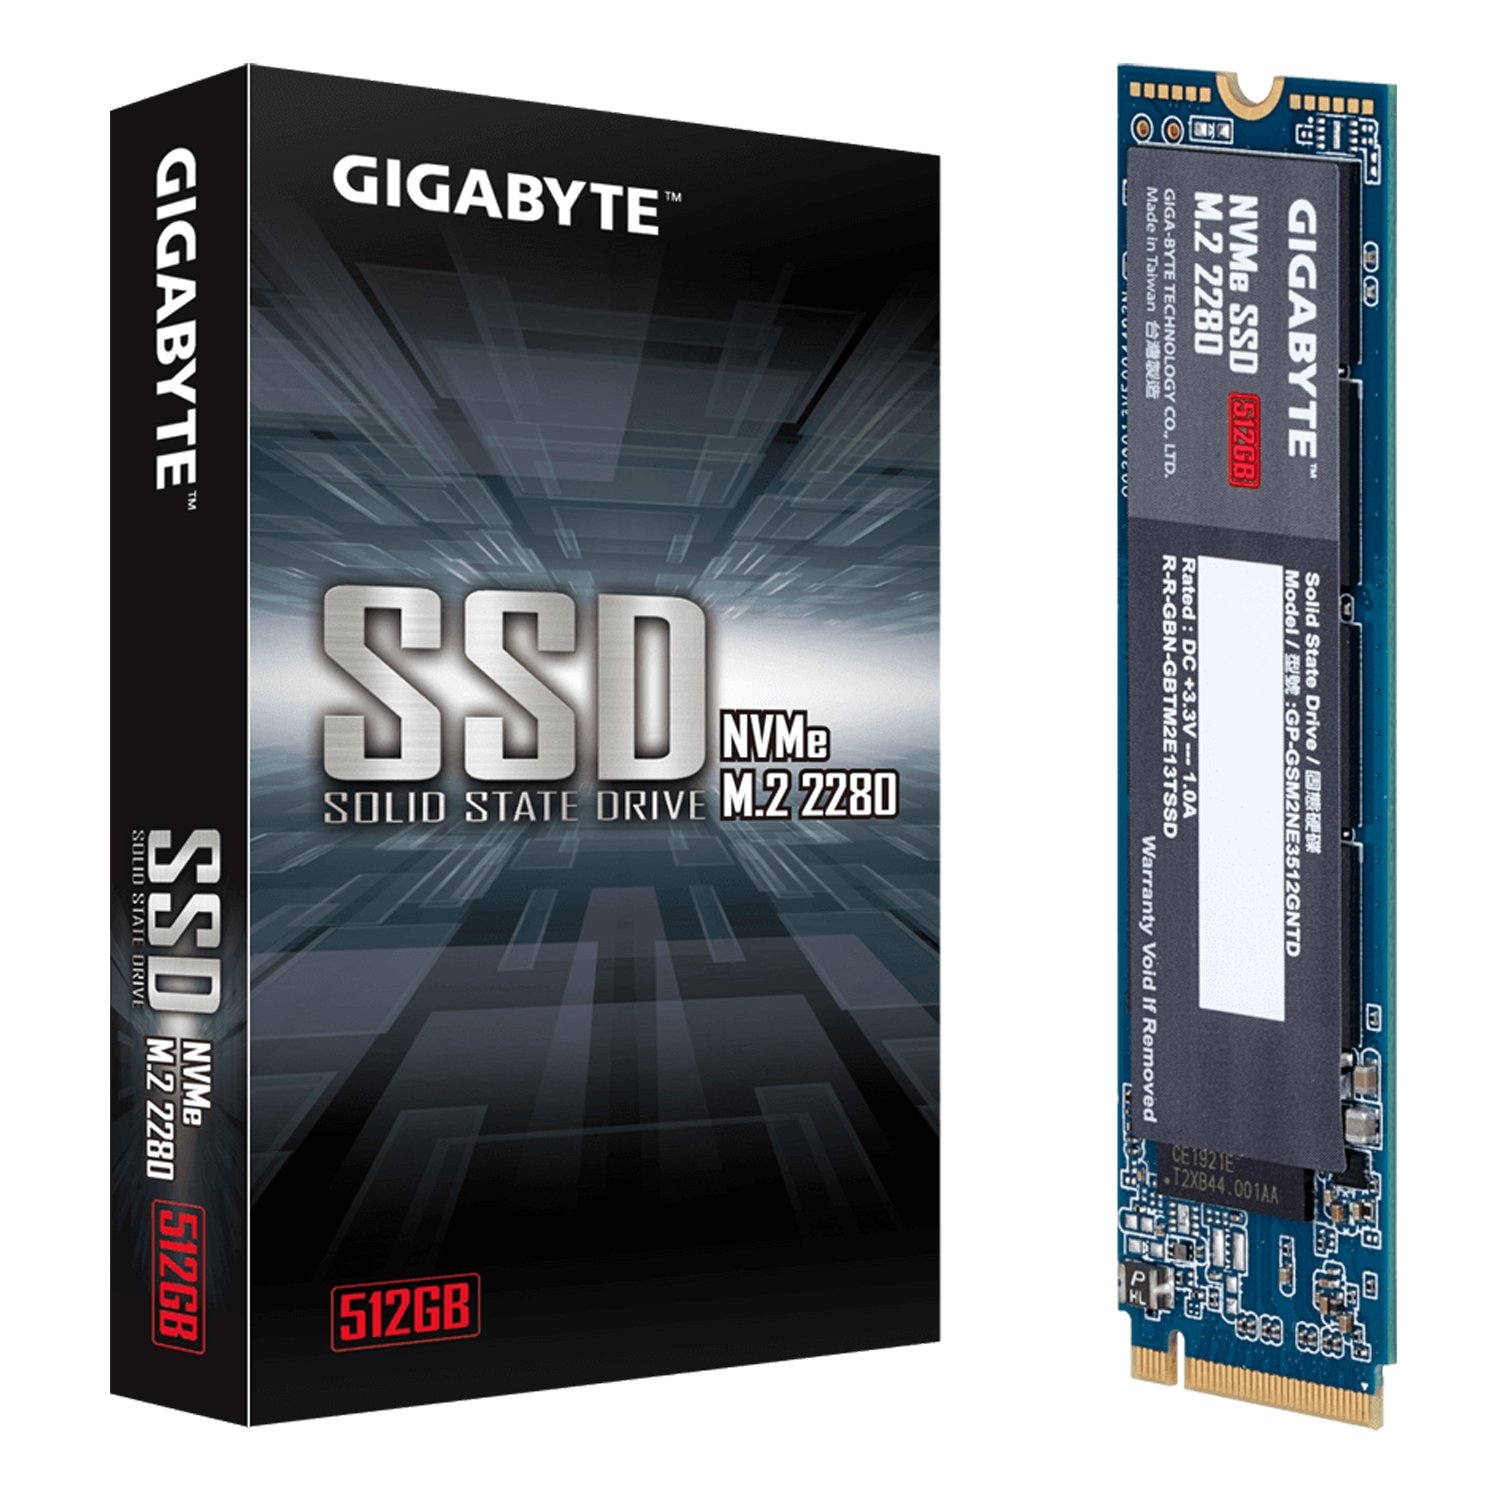 DISCO SSD GIGABYTE 512GB M2 NVME